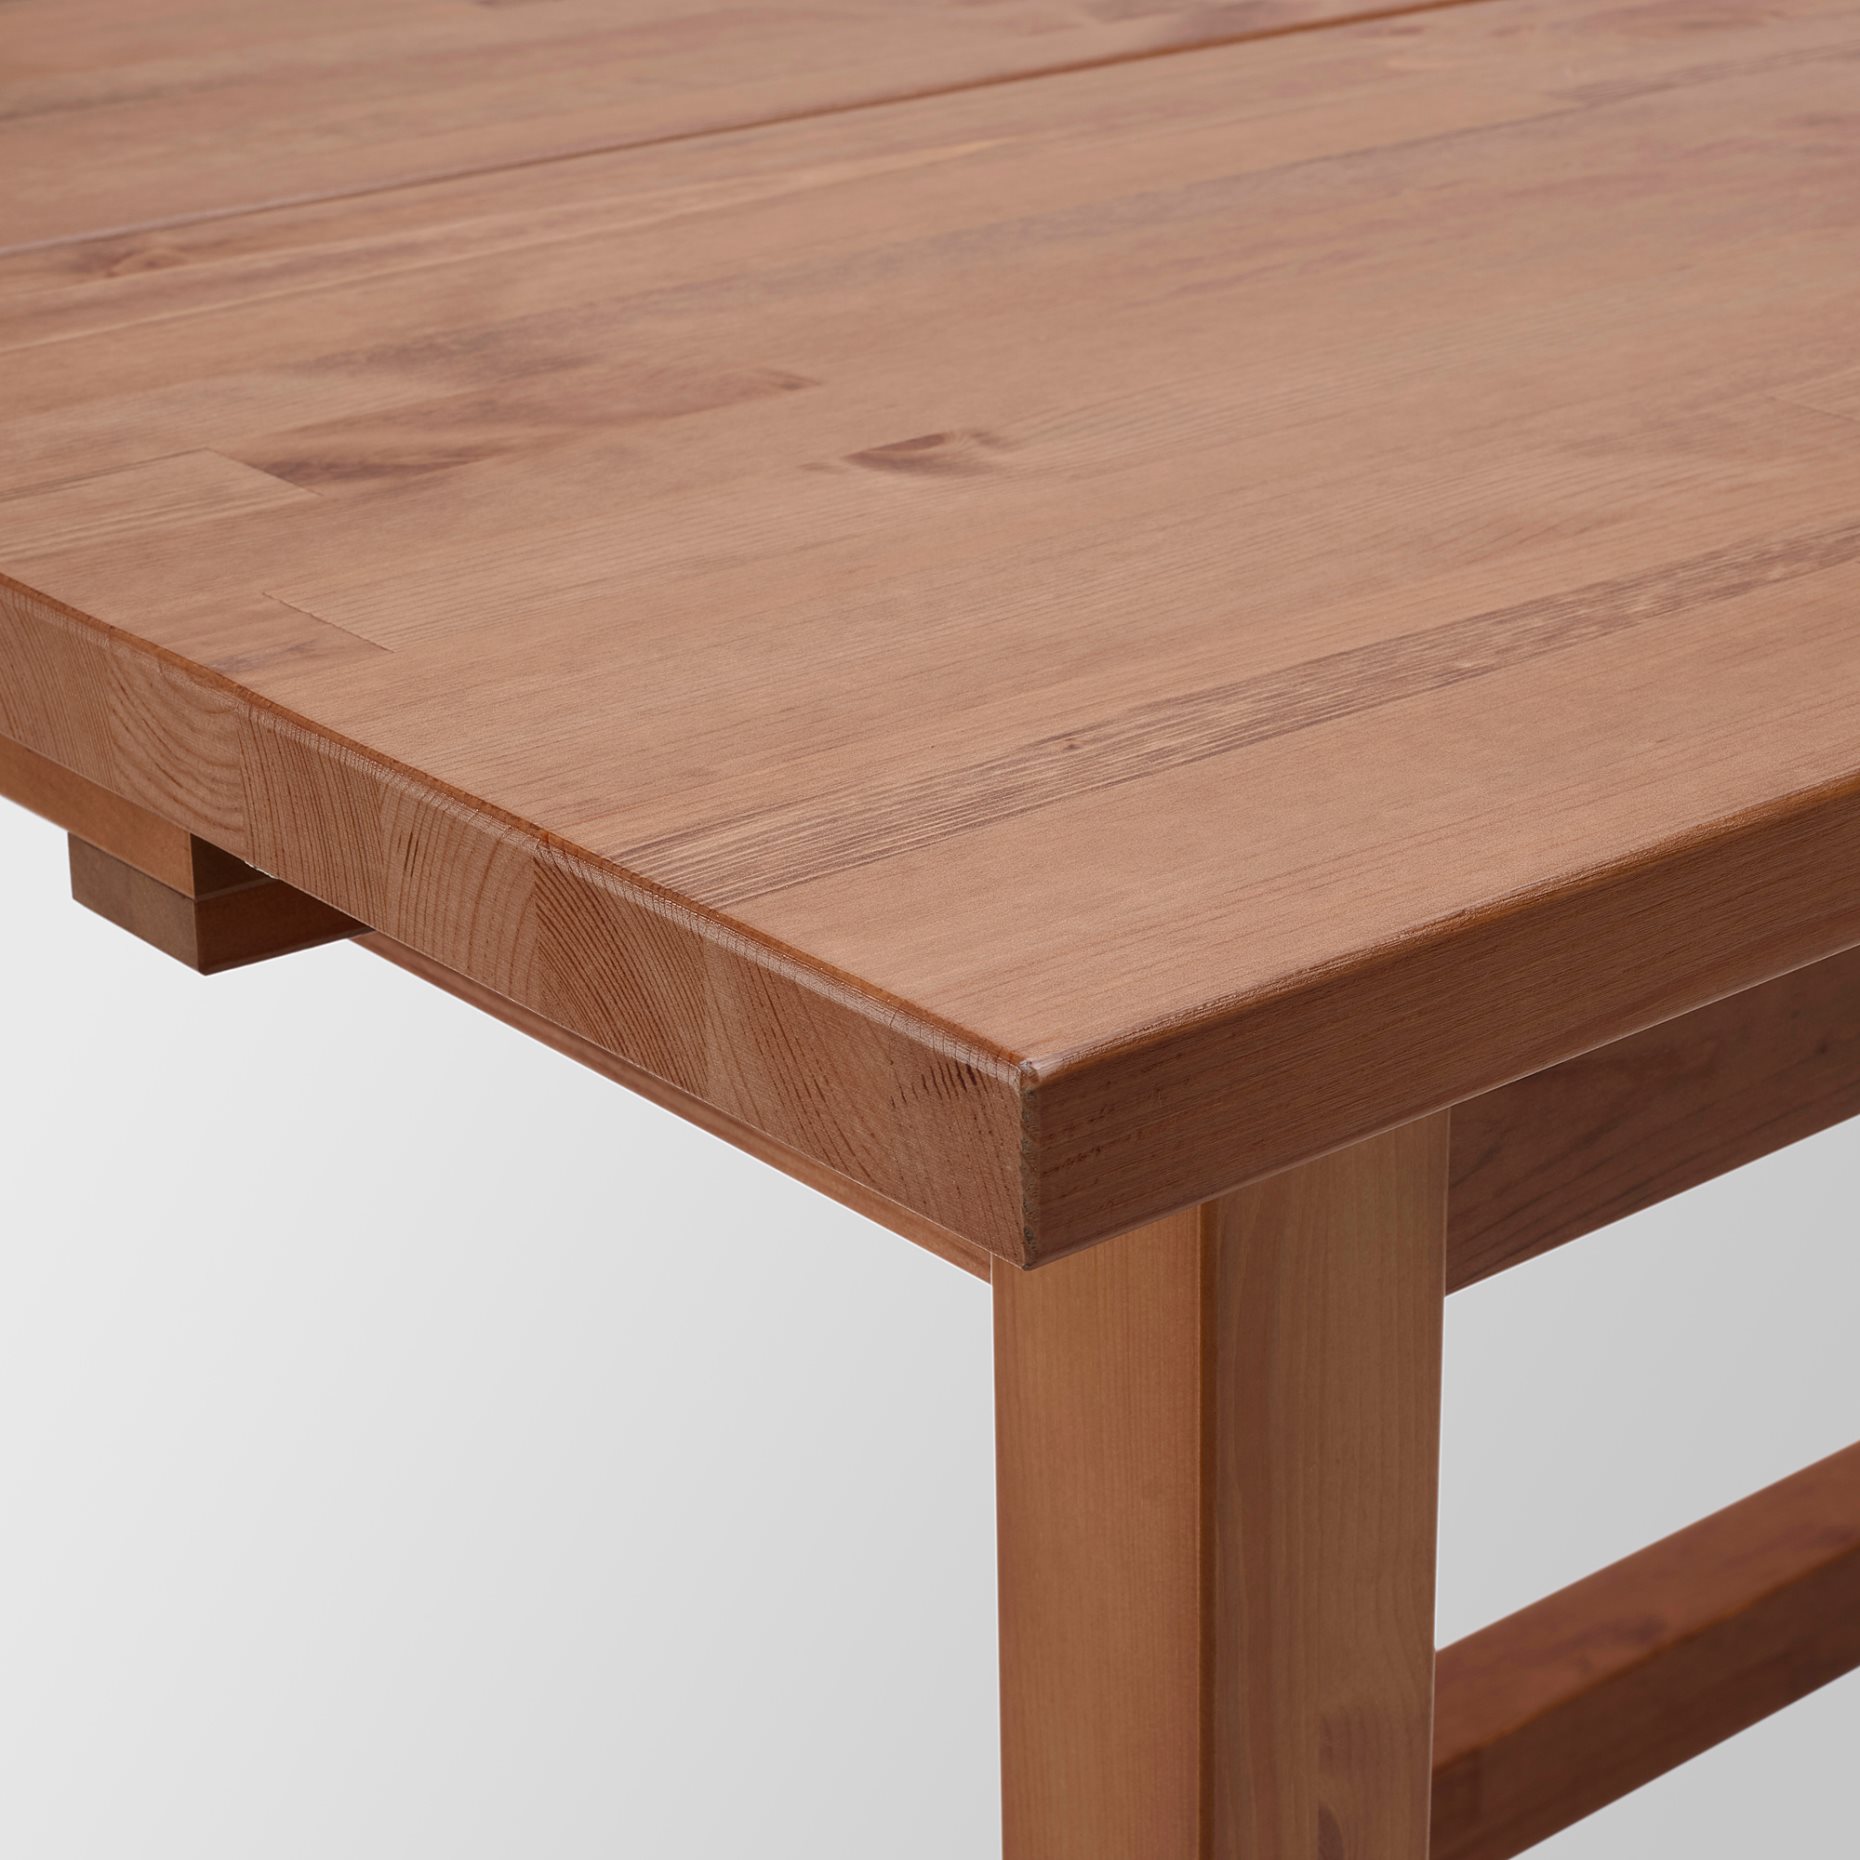 NORDVIKEN, επεκτεινόμενο τραπέζι, 152/223x95 cm, 804.885.44